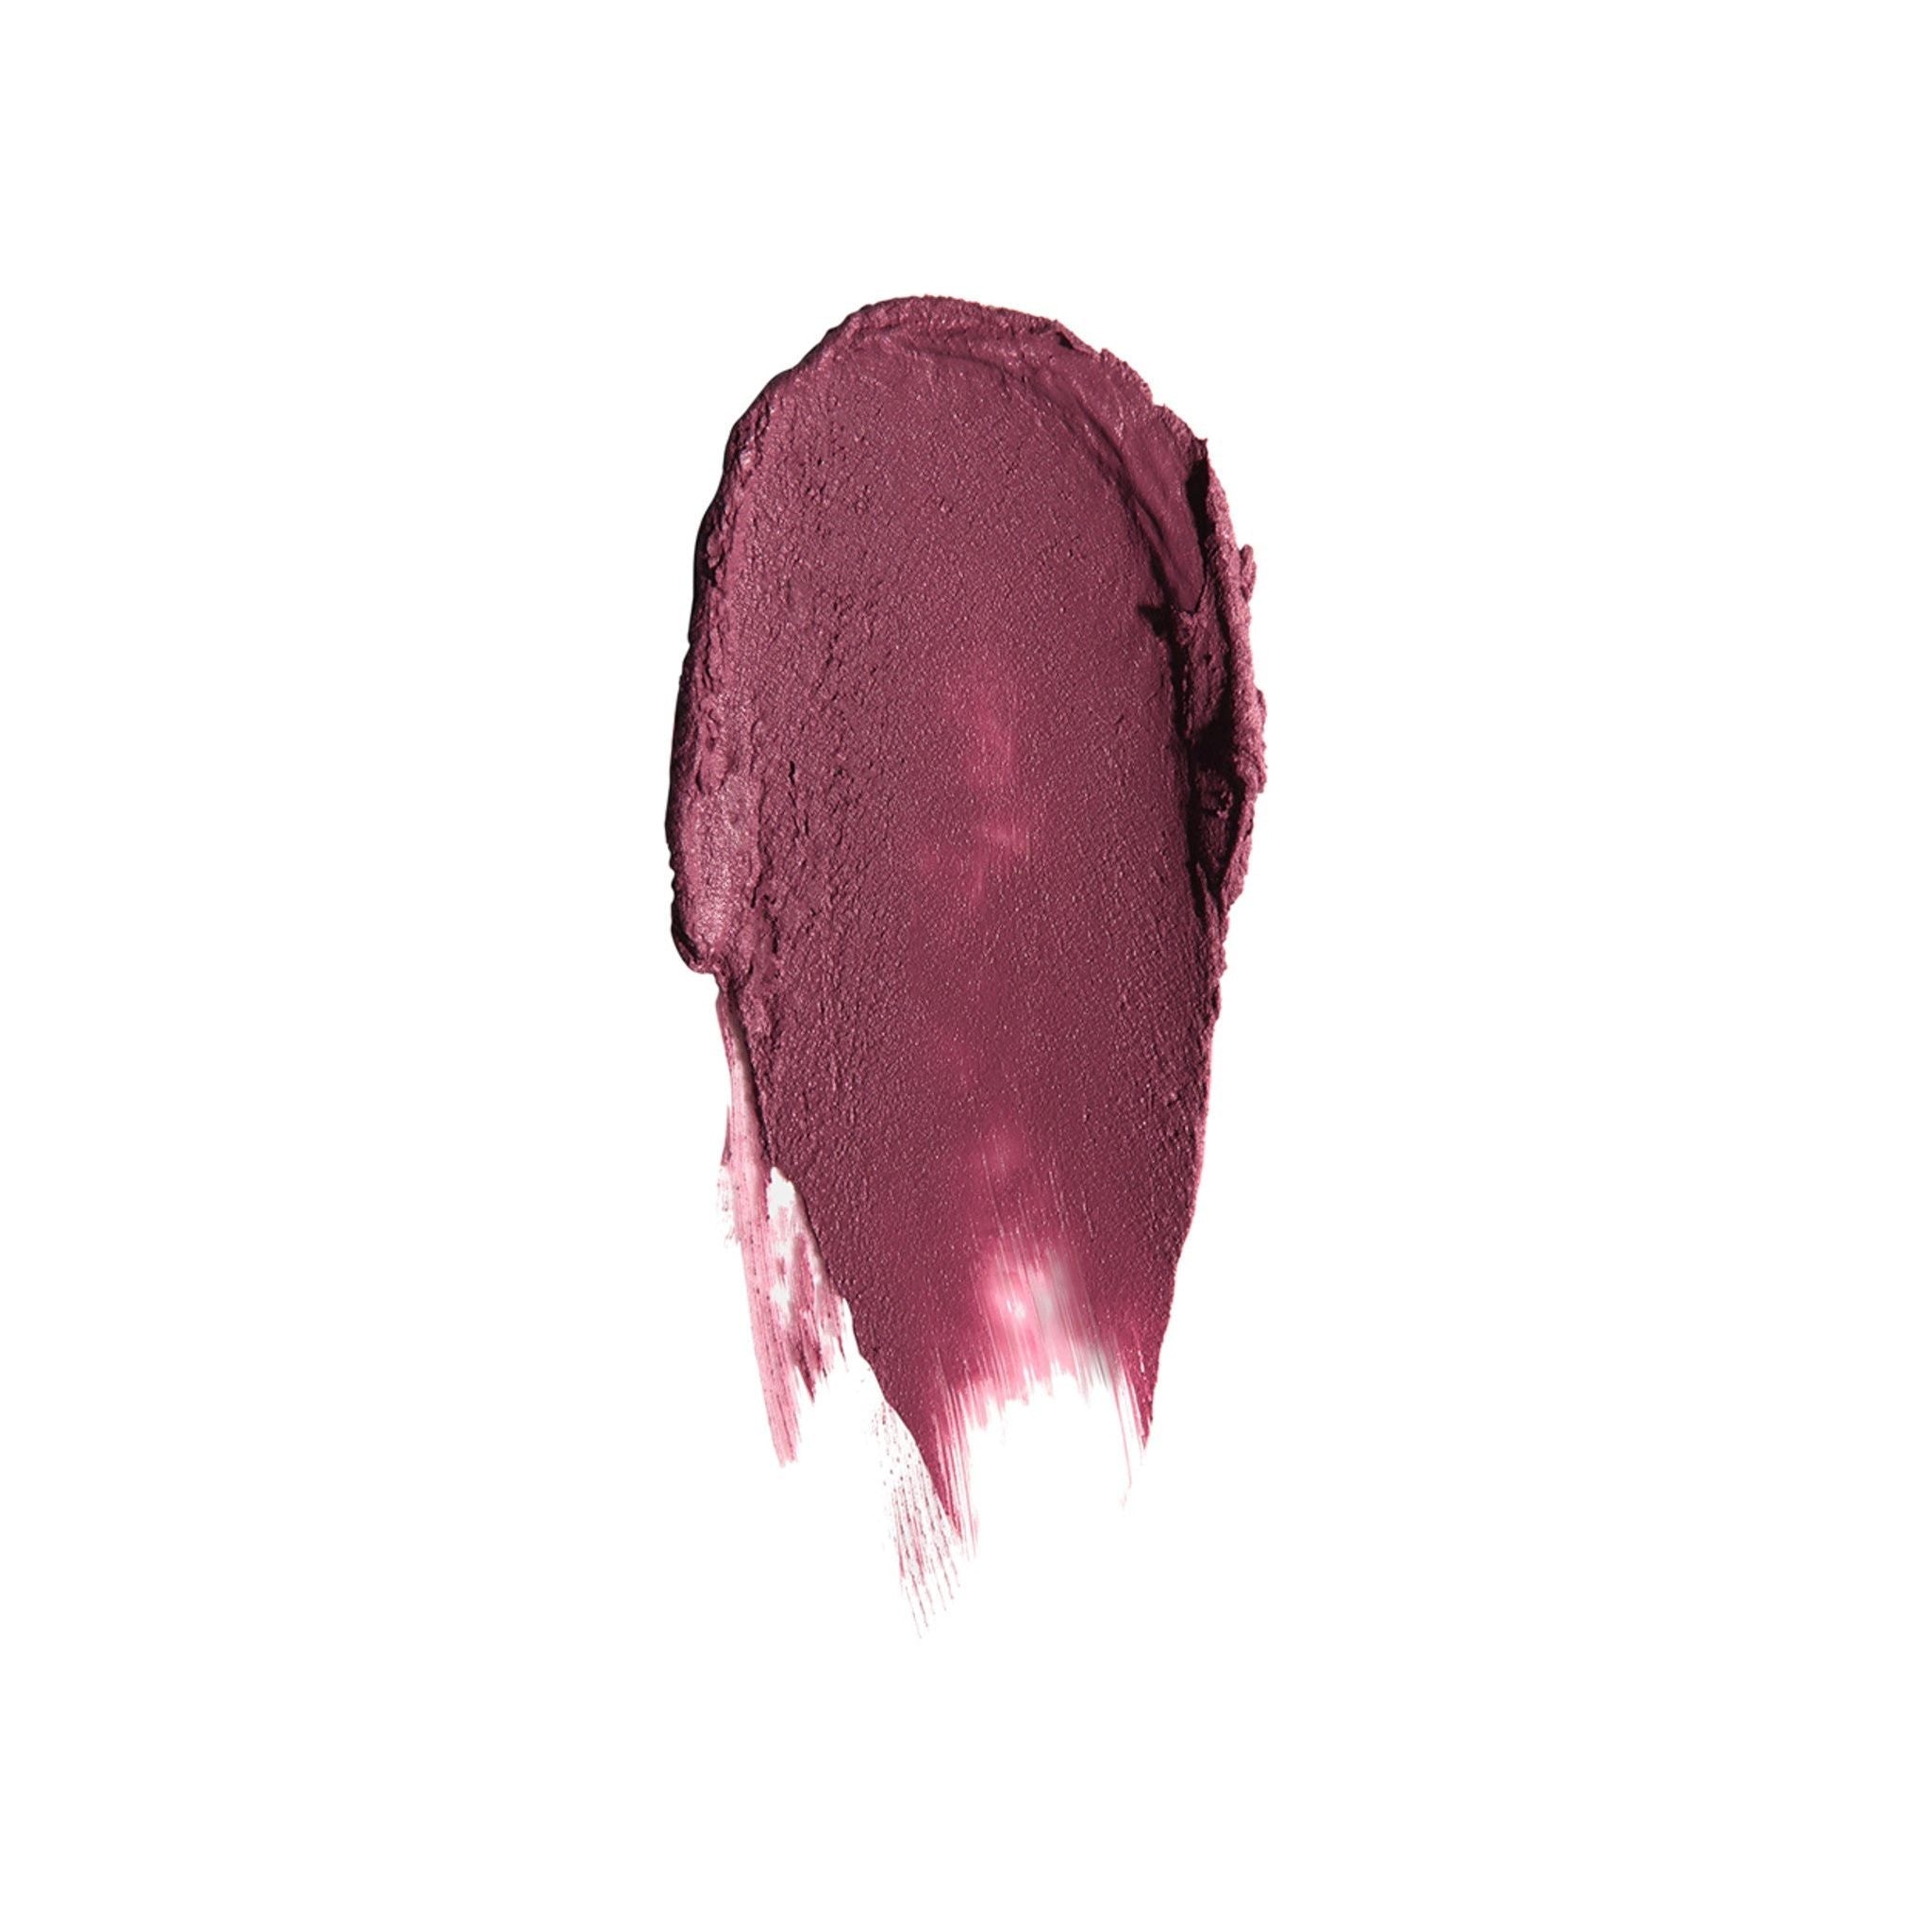 Ogee Full Bloom Sculpted Lipstick